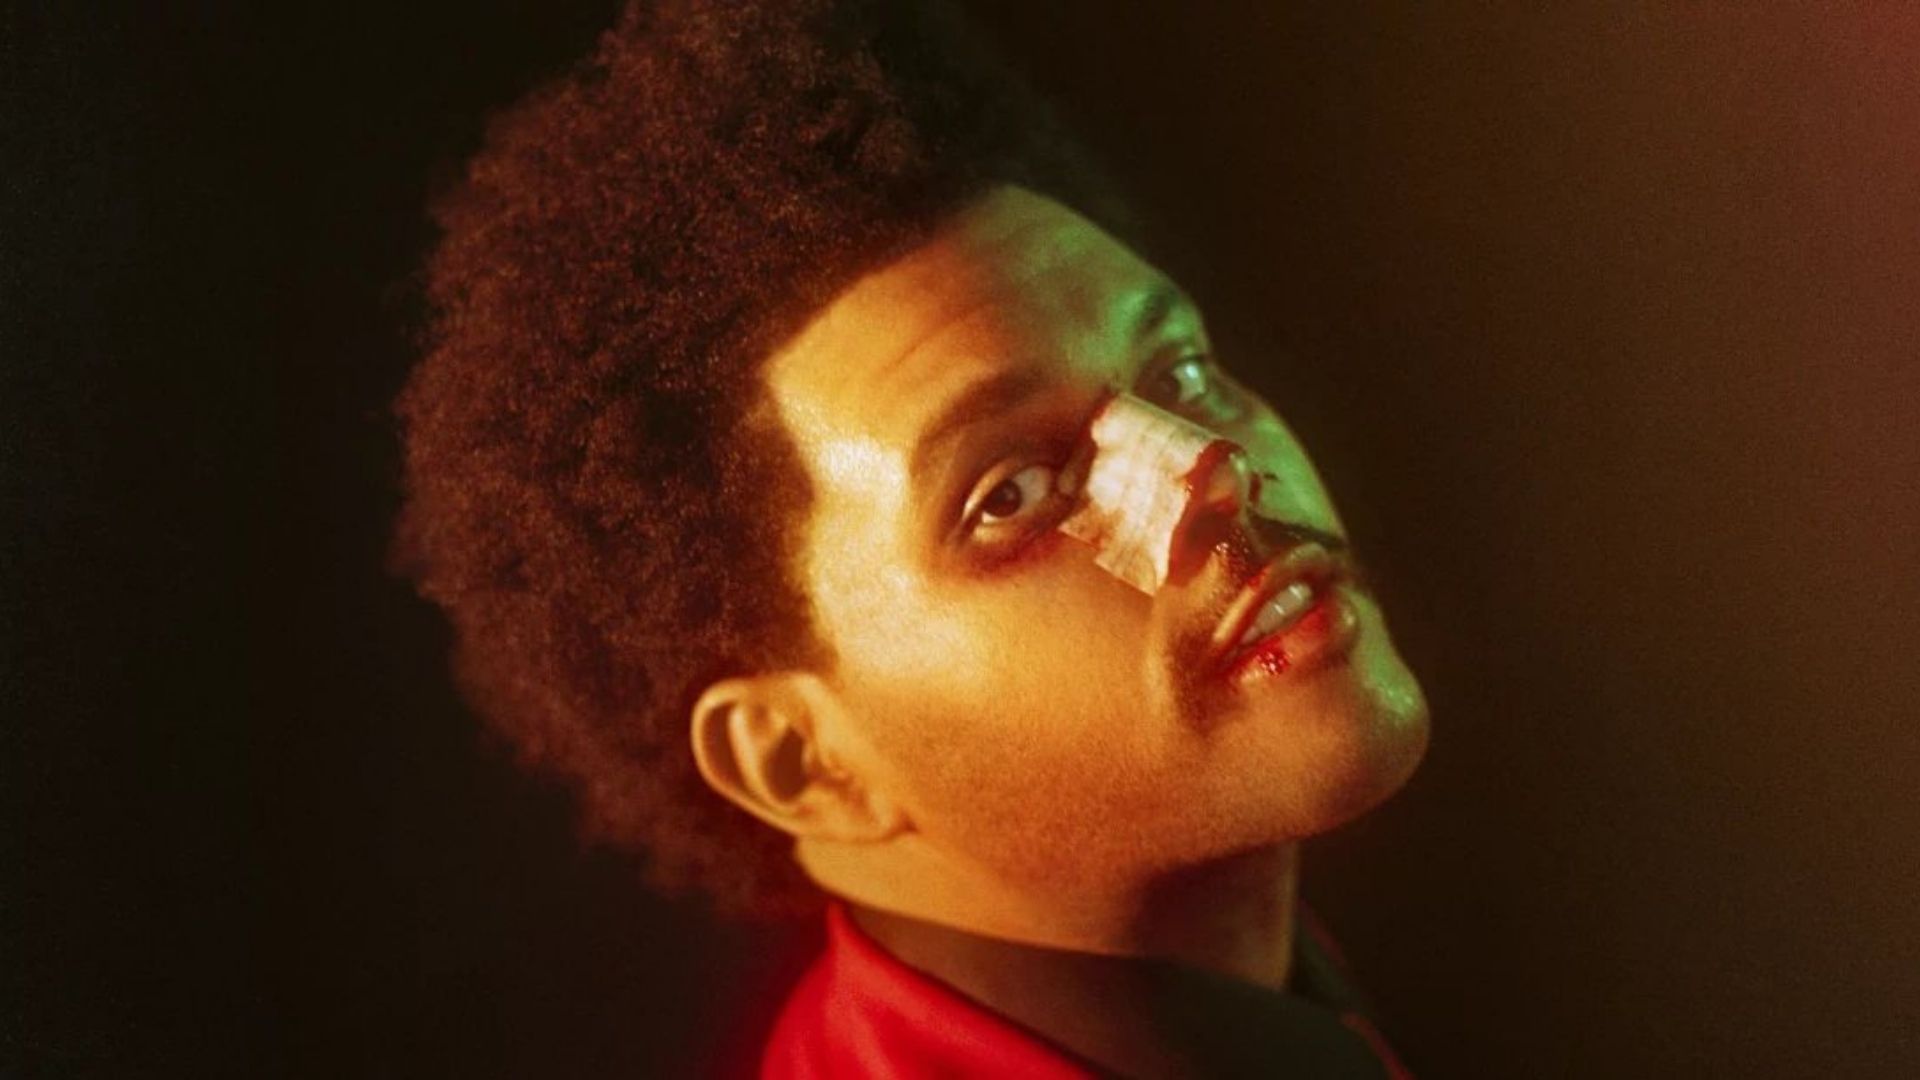 The Weeknd critica a elite branca e o racismo fetichista no novo clipe de “Too Late”